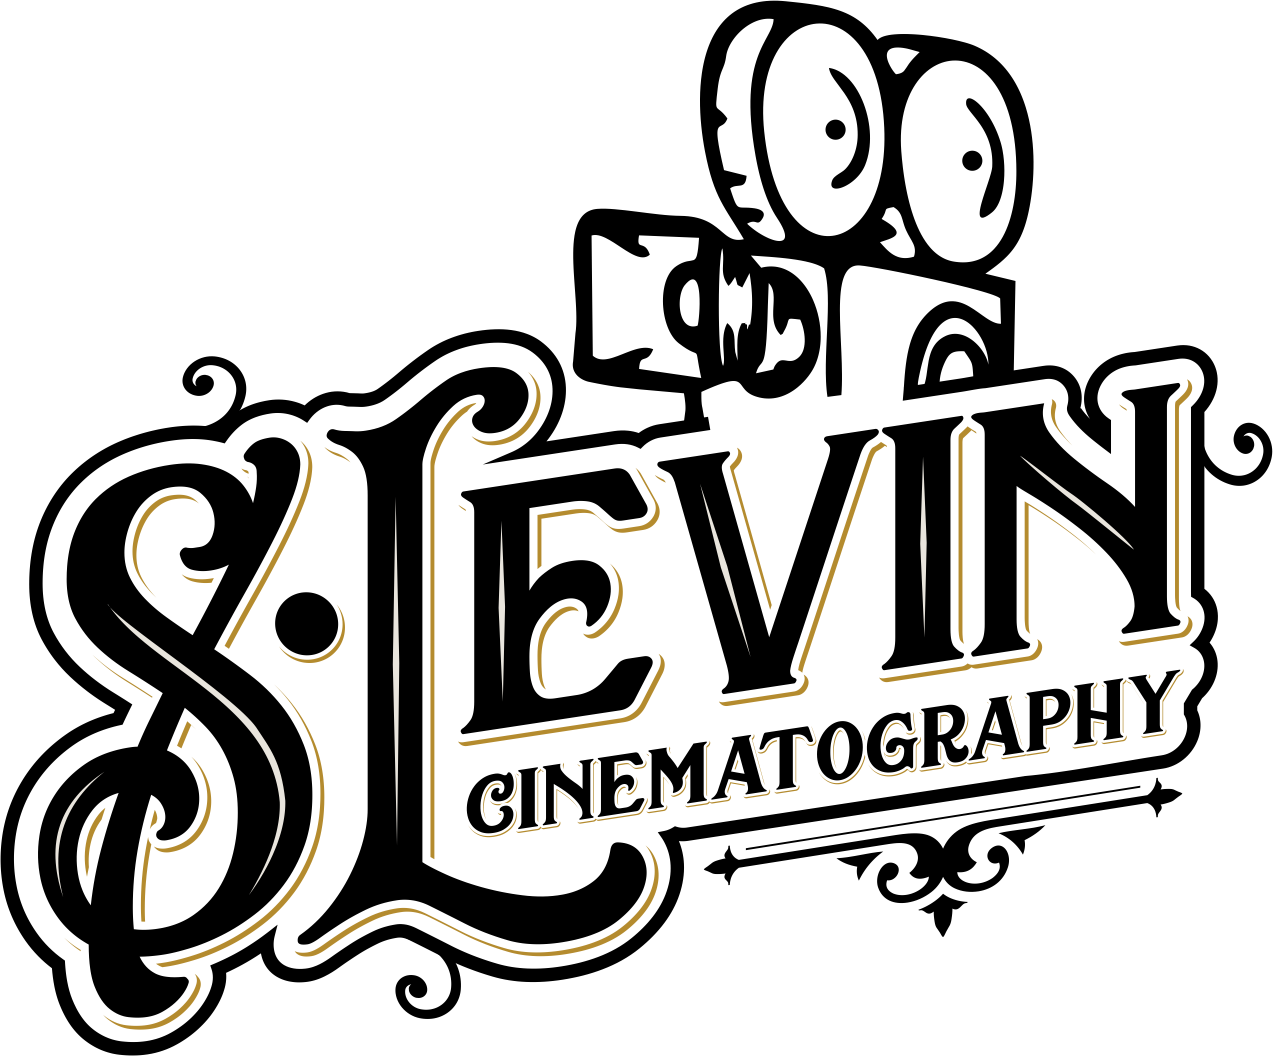 Steve Levin